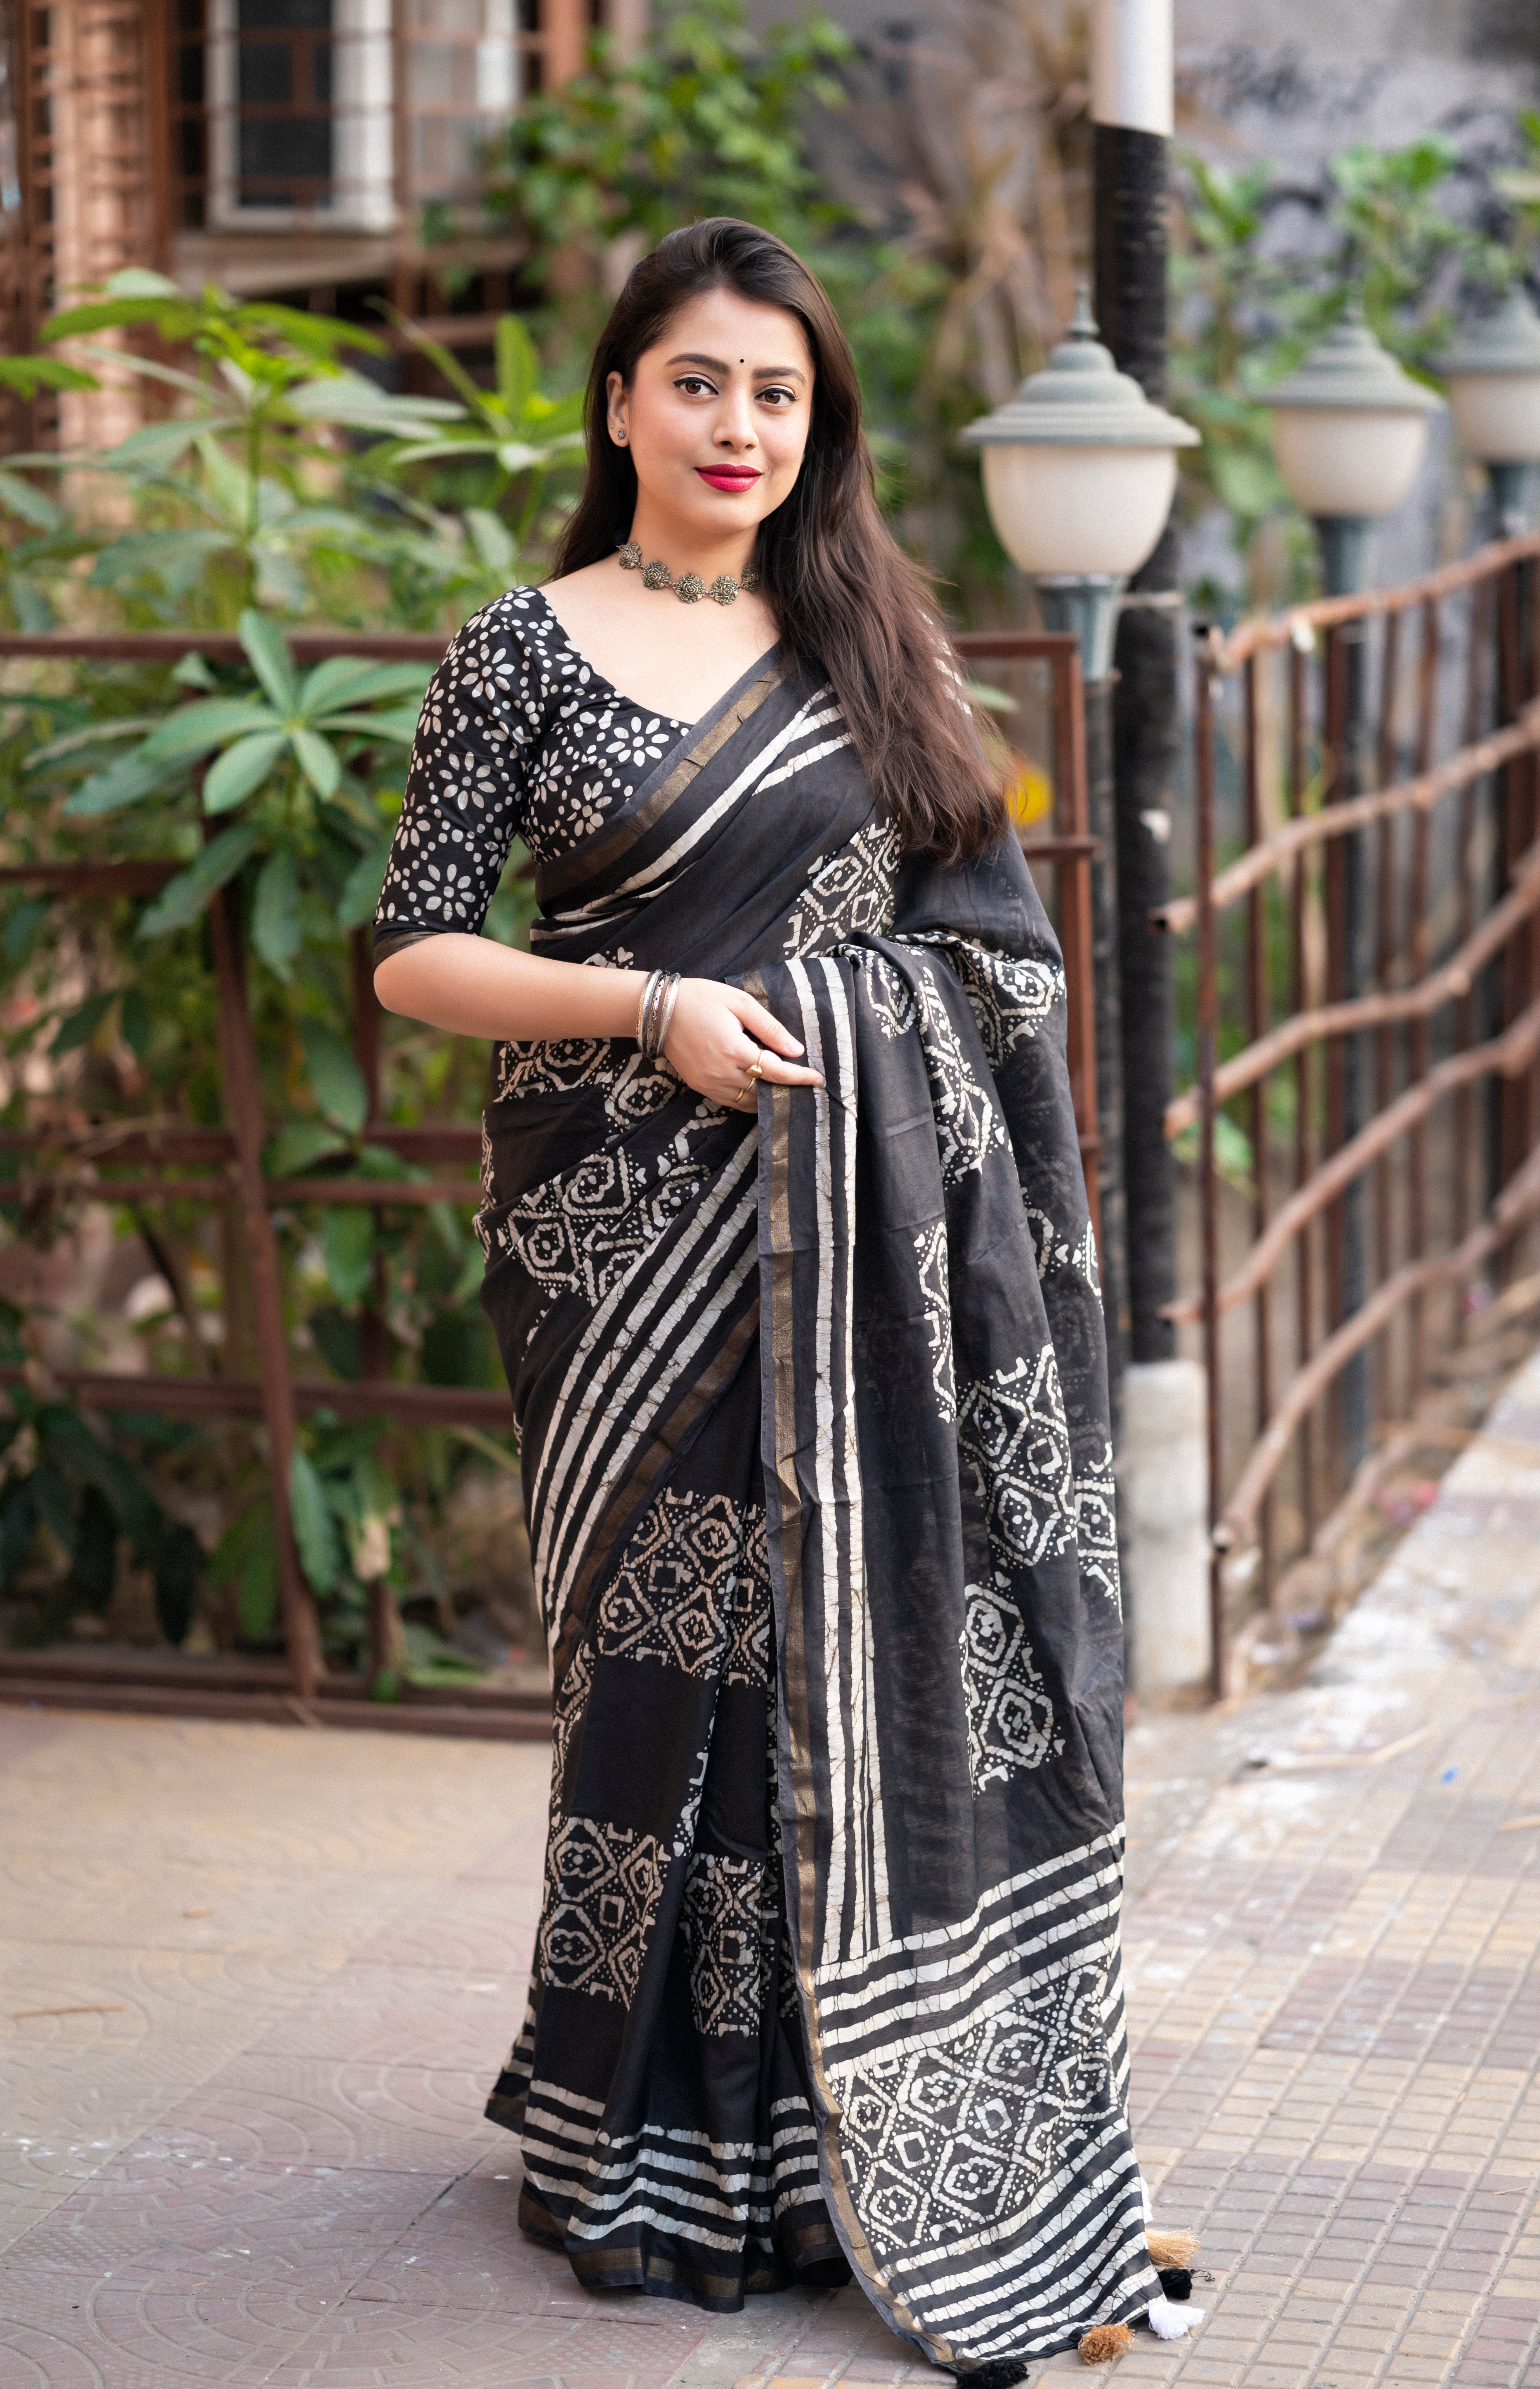 Black Pure Cotton Handblock Batik Print Sari